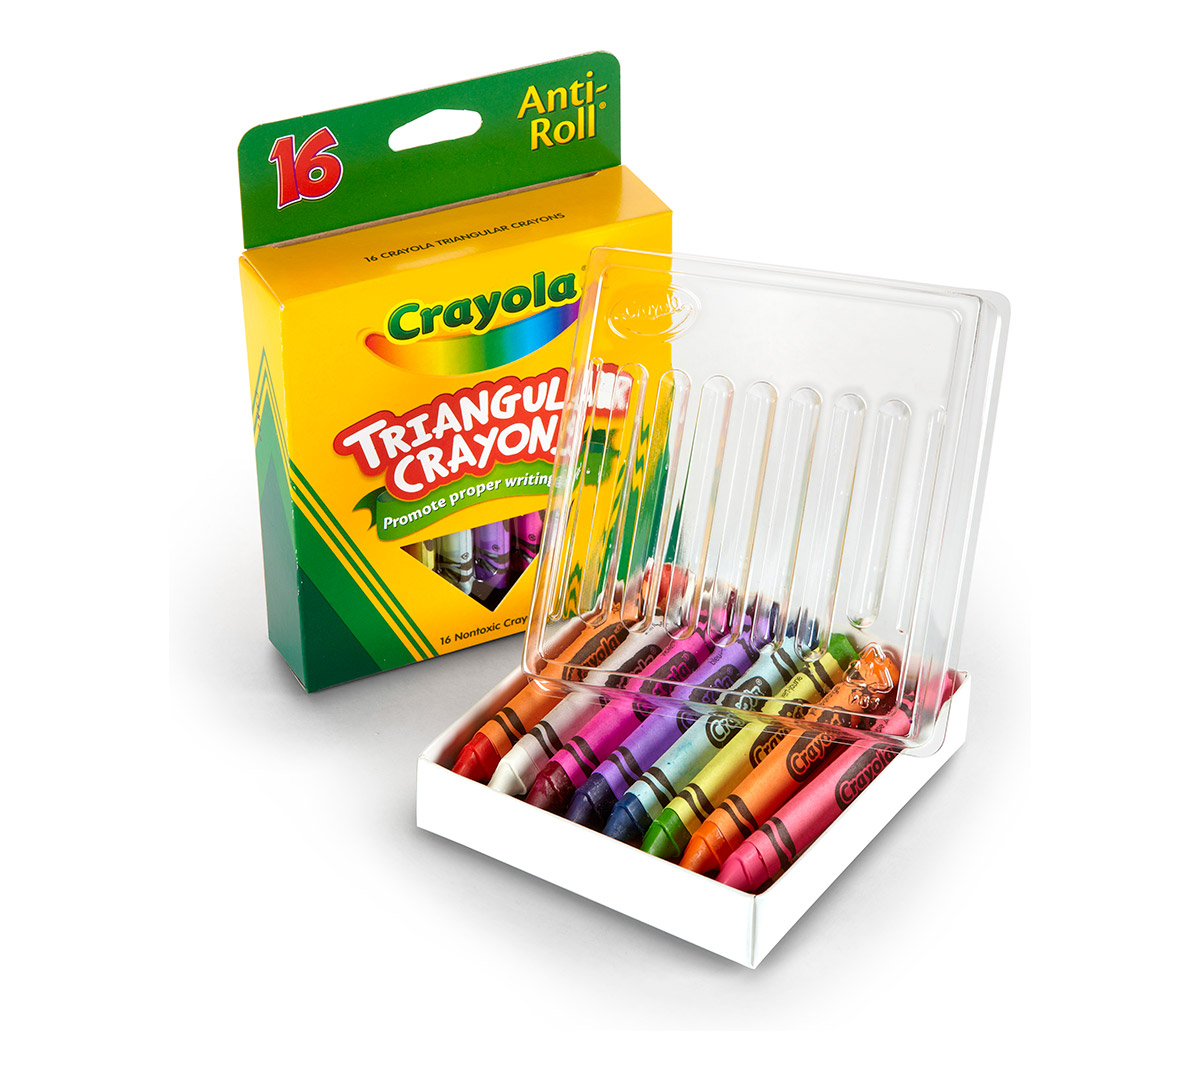  Pencil Buddies Sketch Pencils for Drawing, Triangular